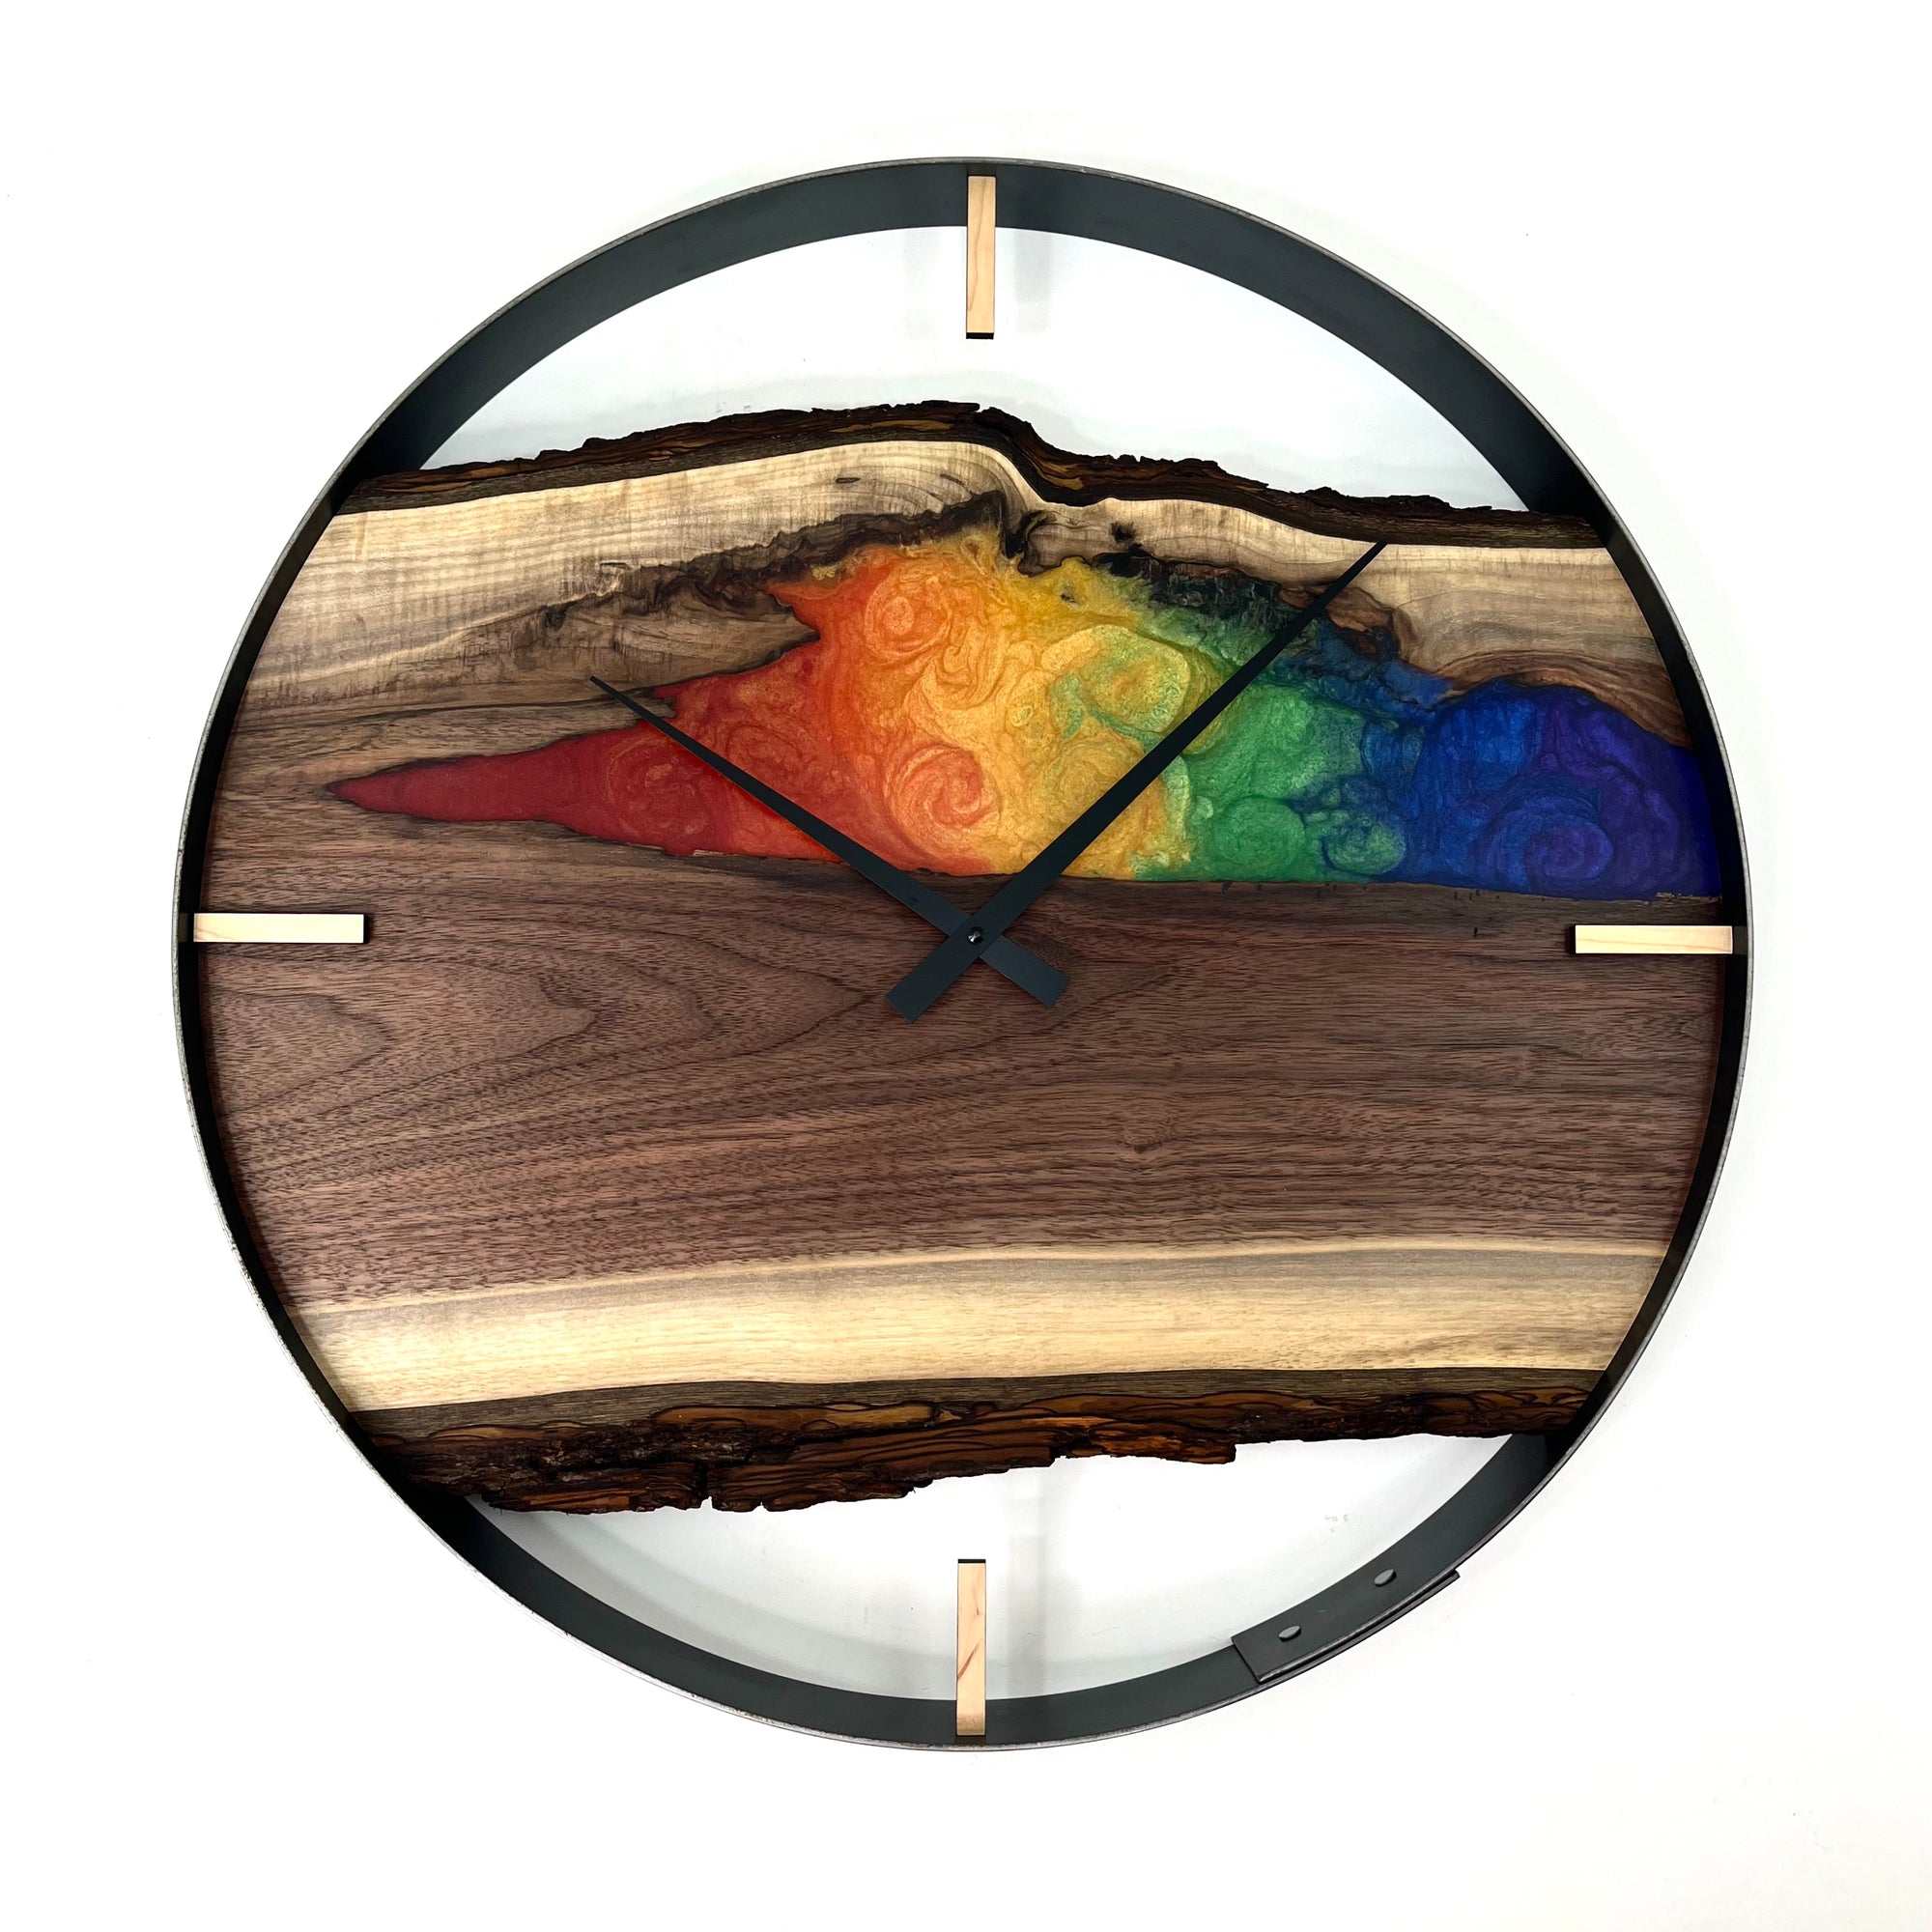 21” Black Walnut Live Edge Wood Clock ft. Rainbow Epoxy Inlay